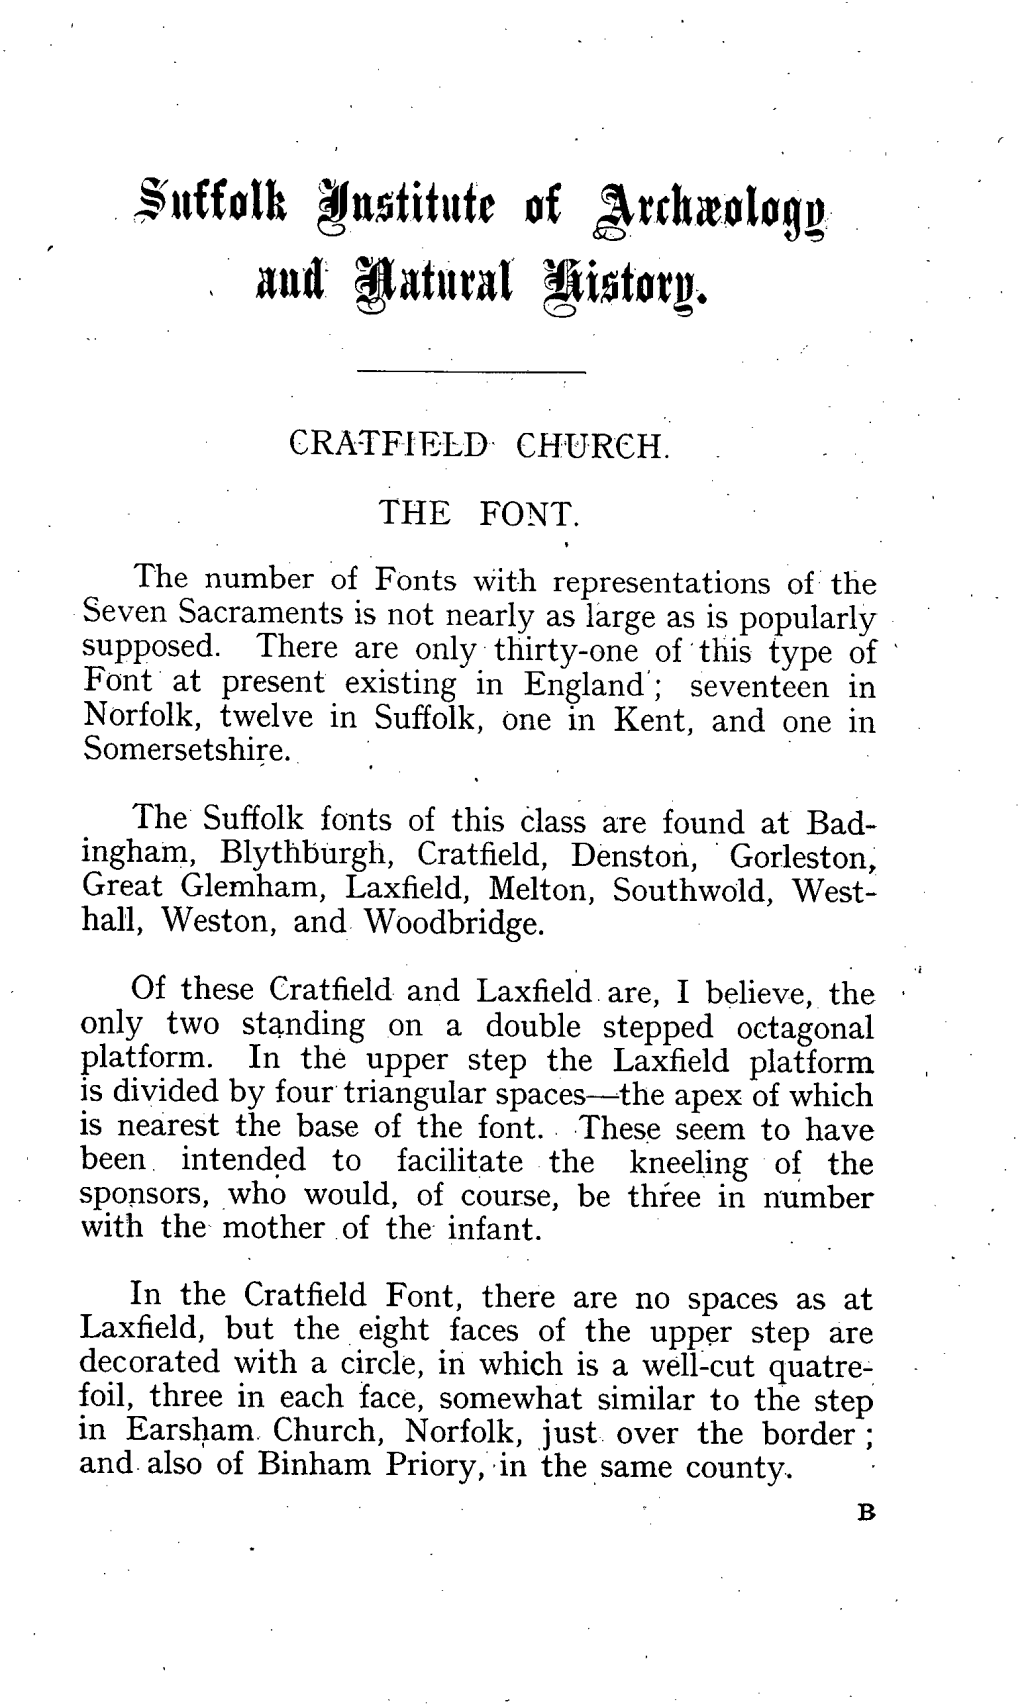 Cratfield Church. the Font A. J. Bedell